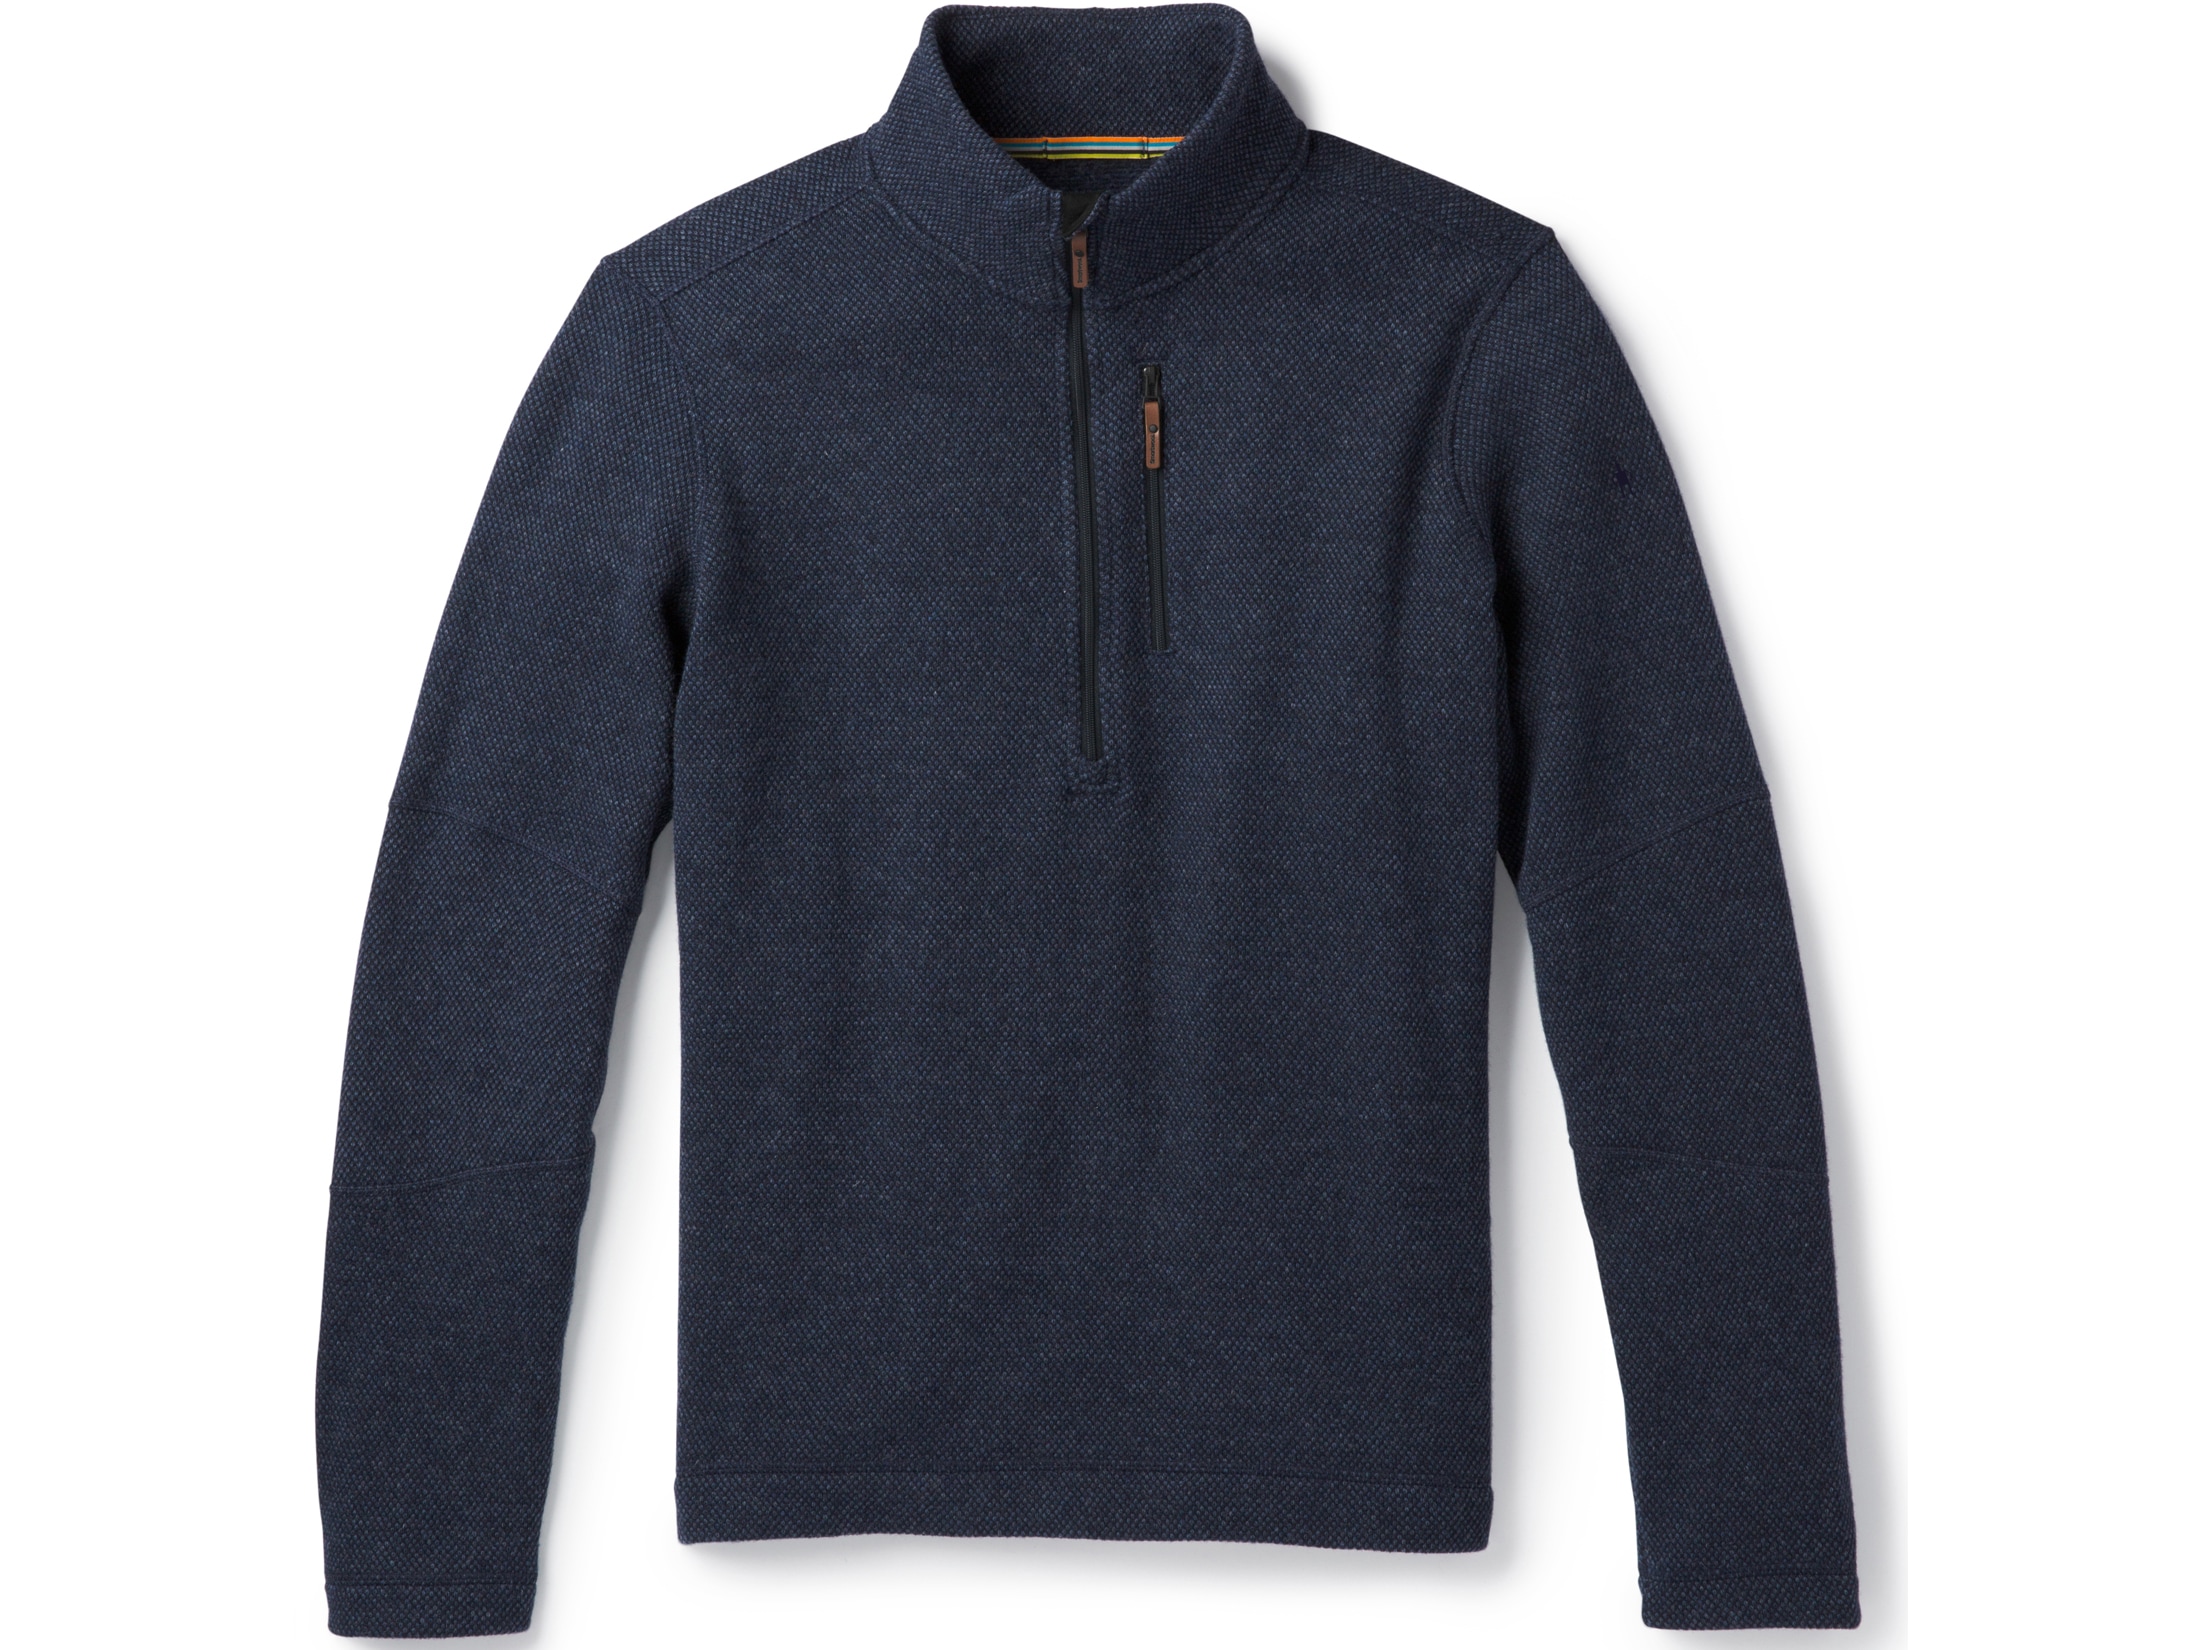 Smartwool Men's Hudson Trail 1/4 Zip Sweater Navy XL